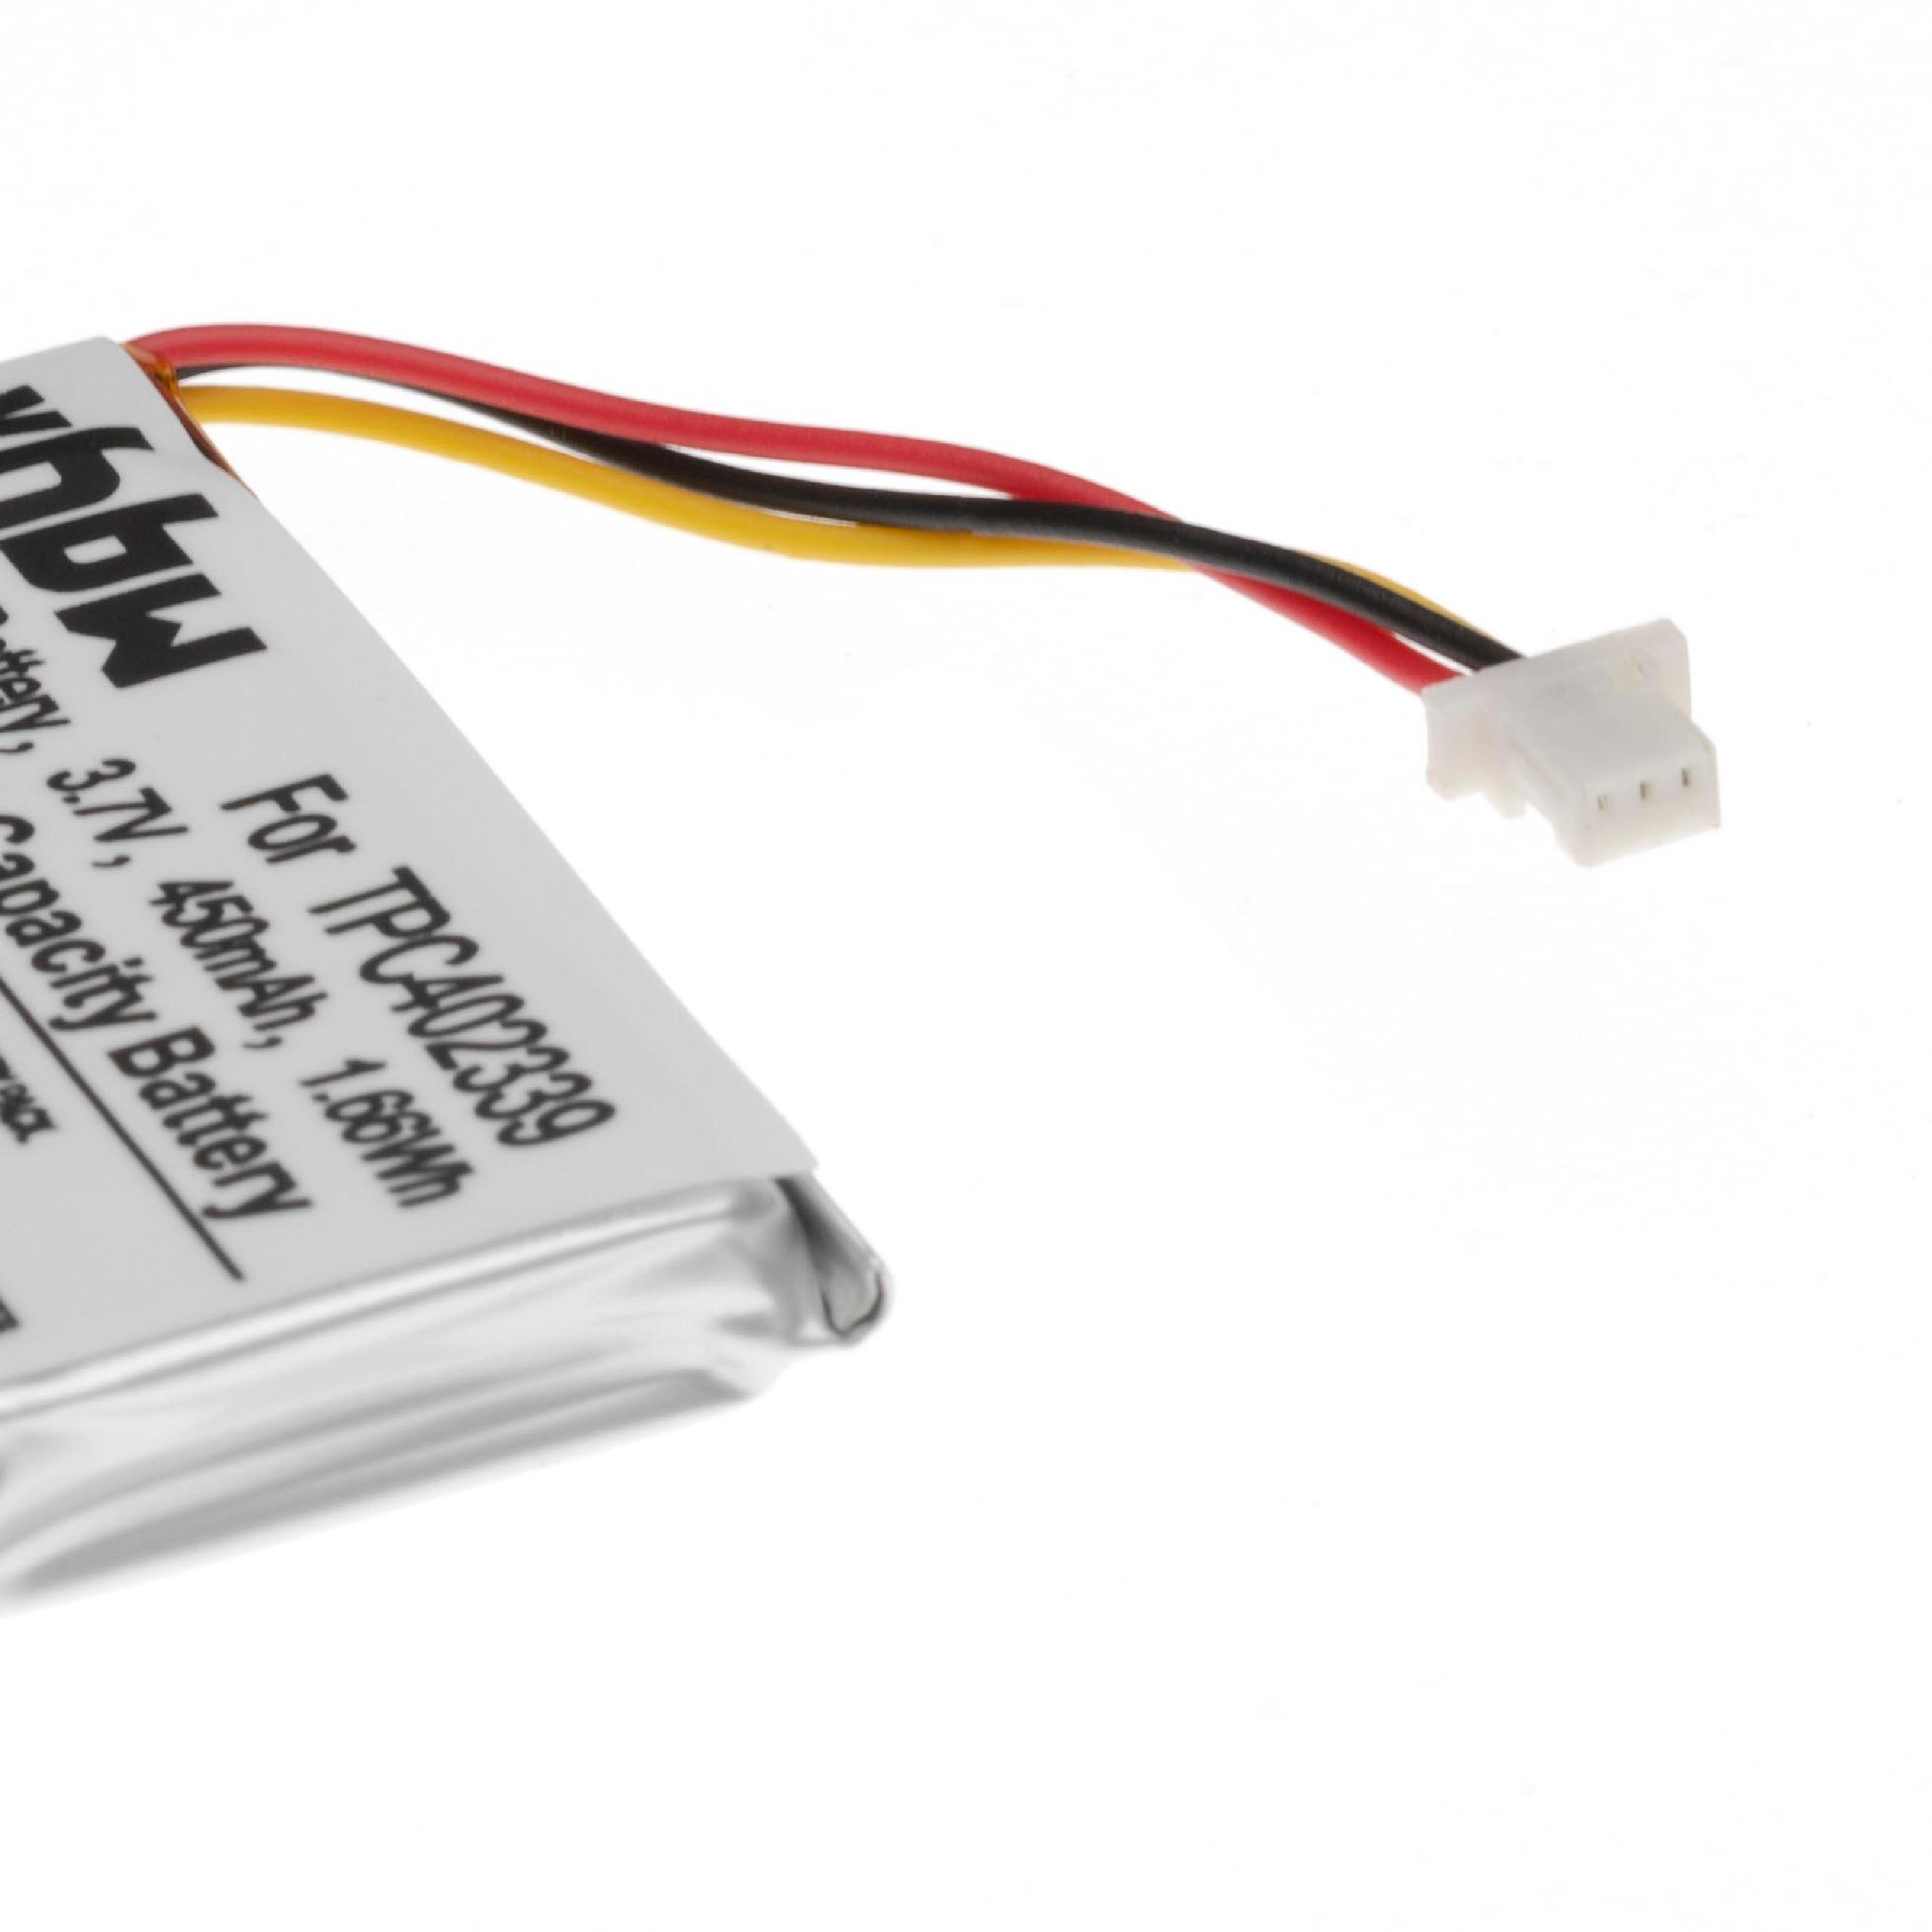 Batería reemplaza Mio TPC402339 para GPS Mio - 450 mAh 3,7 V Li-poli